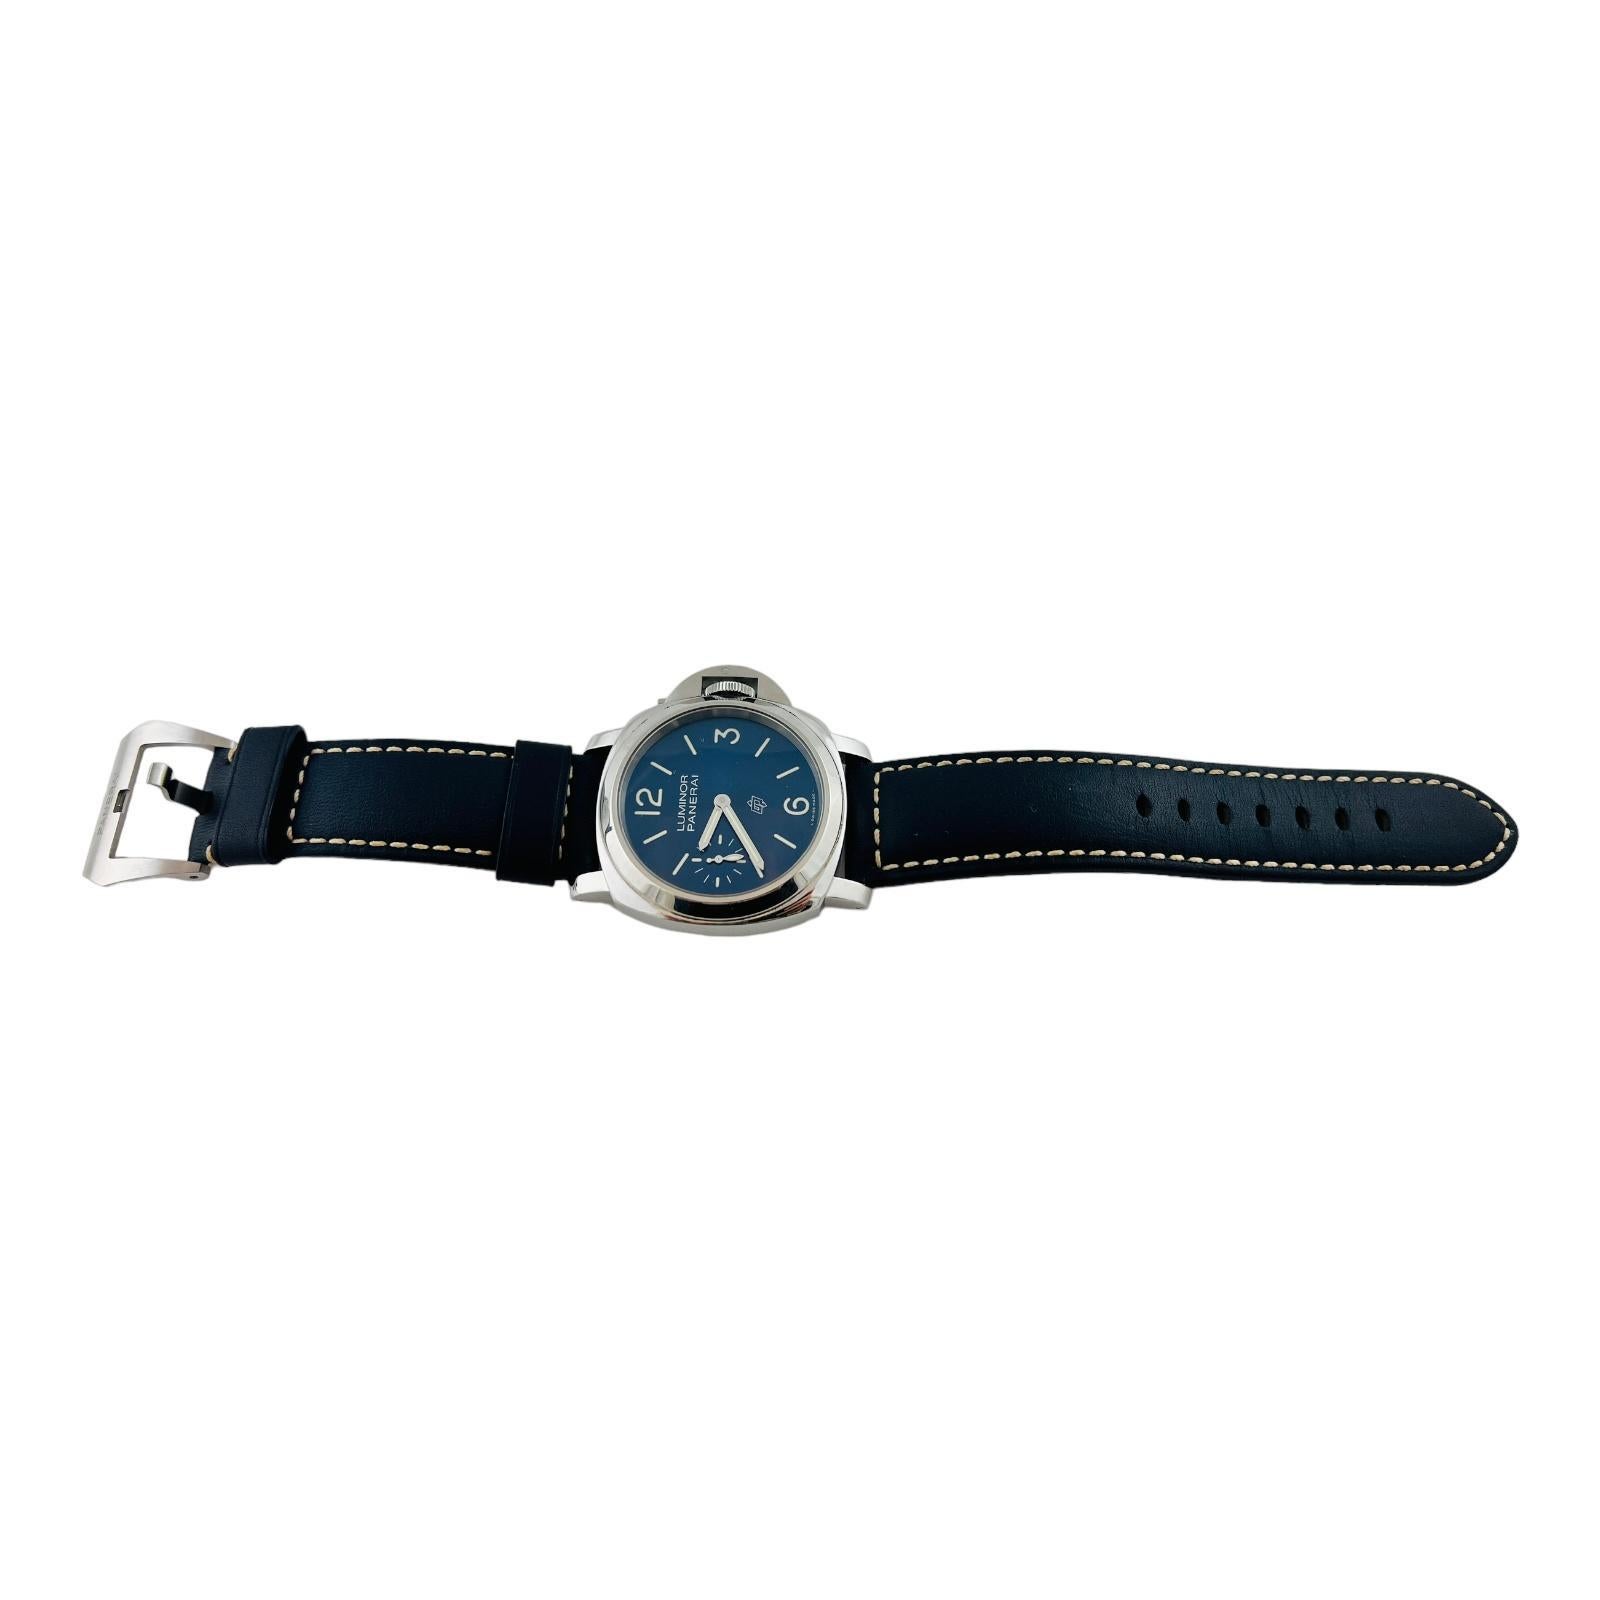 Panerai Luminor Men's Watch PAM 1085 Full Set Blue Dial #15776 For Sale 3